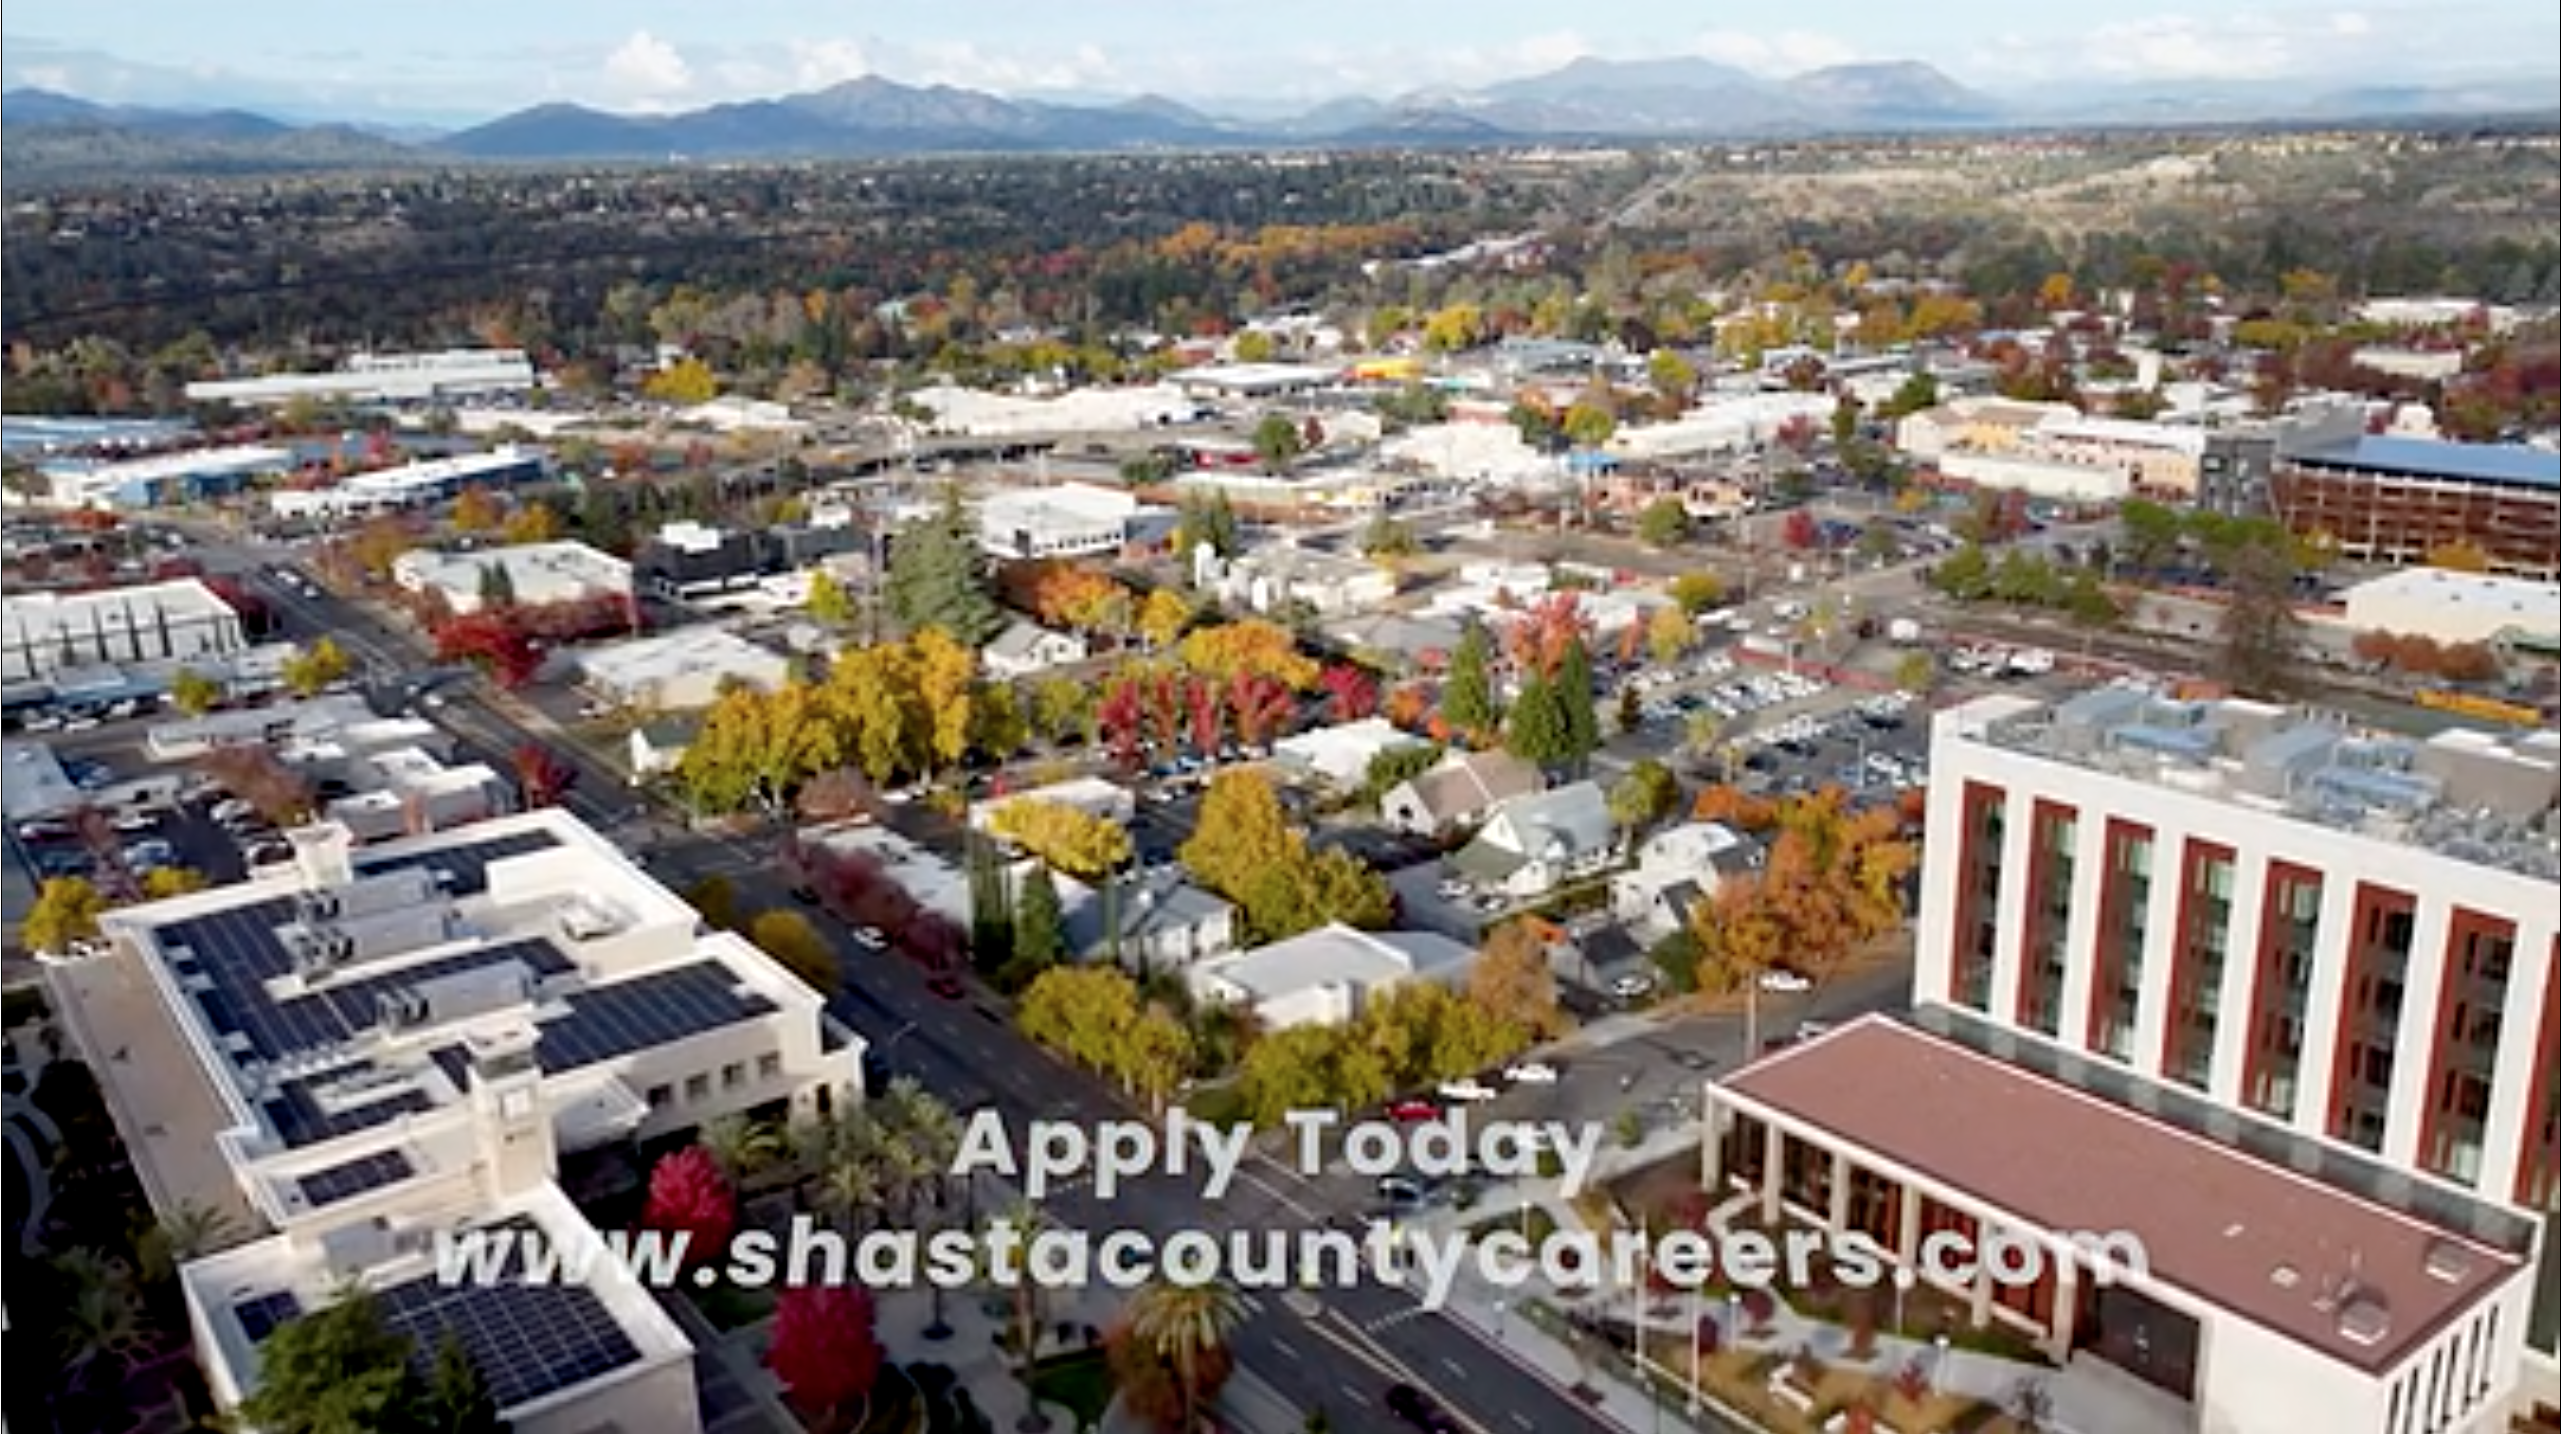 Shasta County, CA – Employment & Recruitment